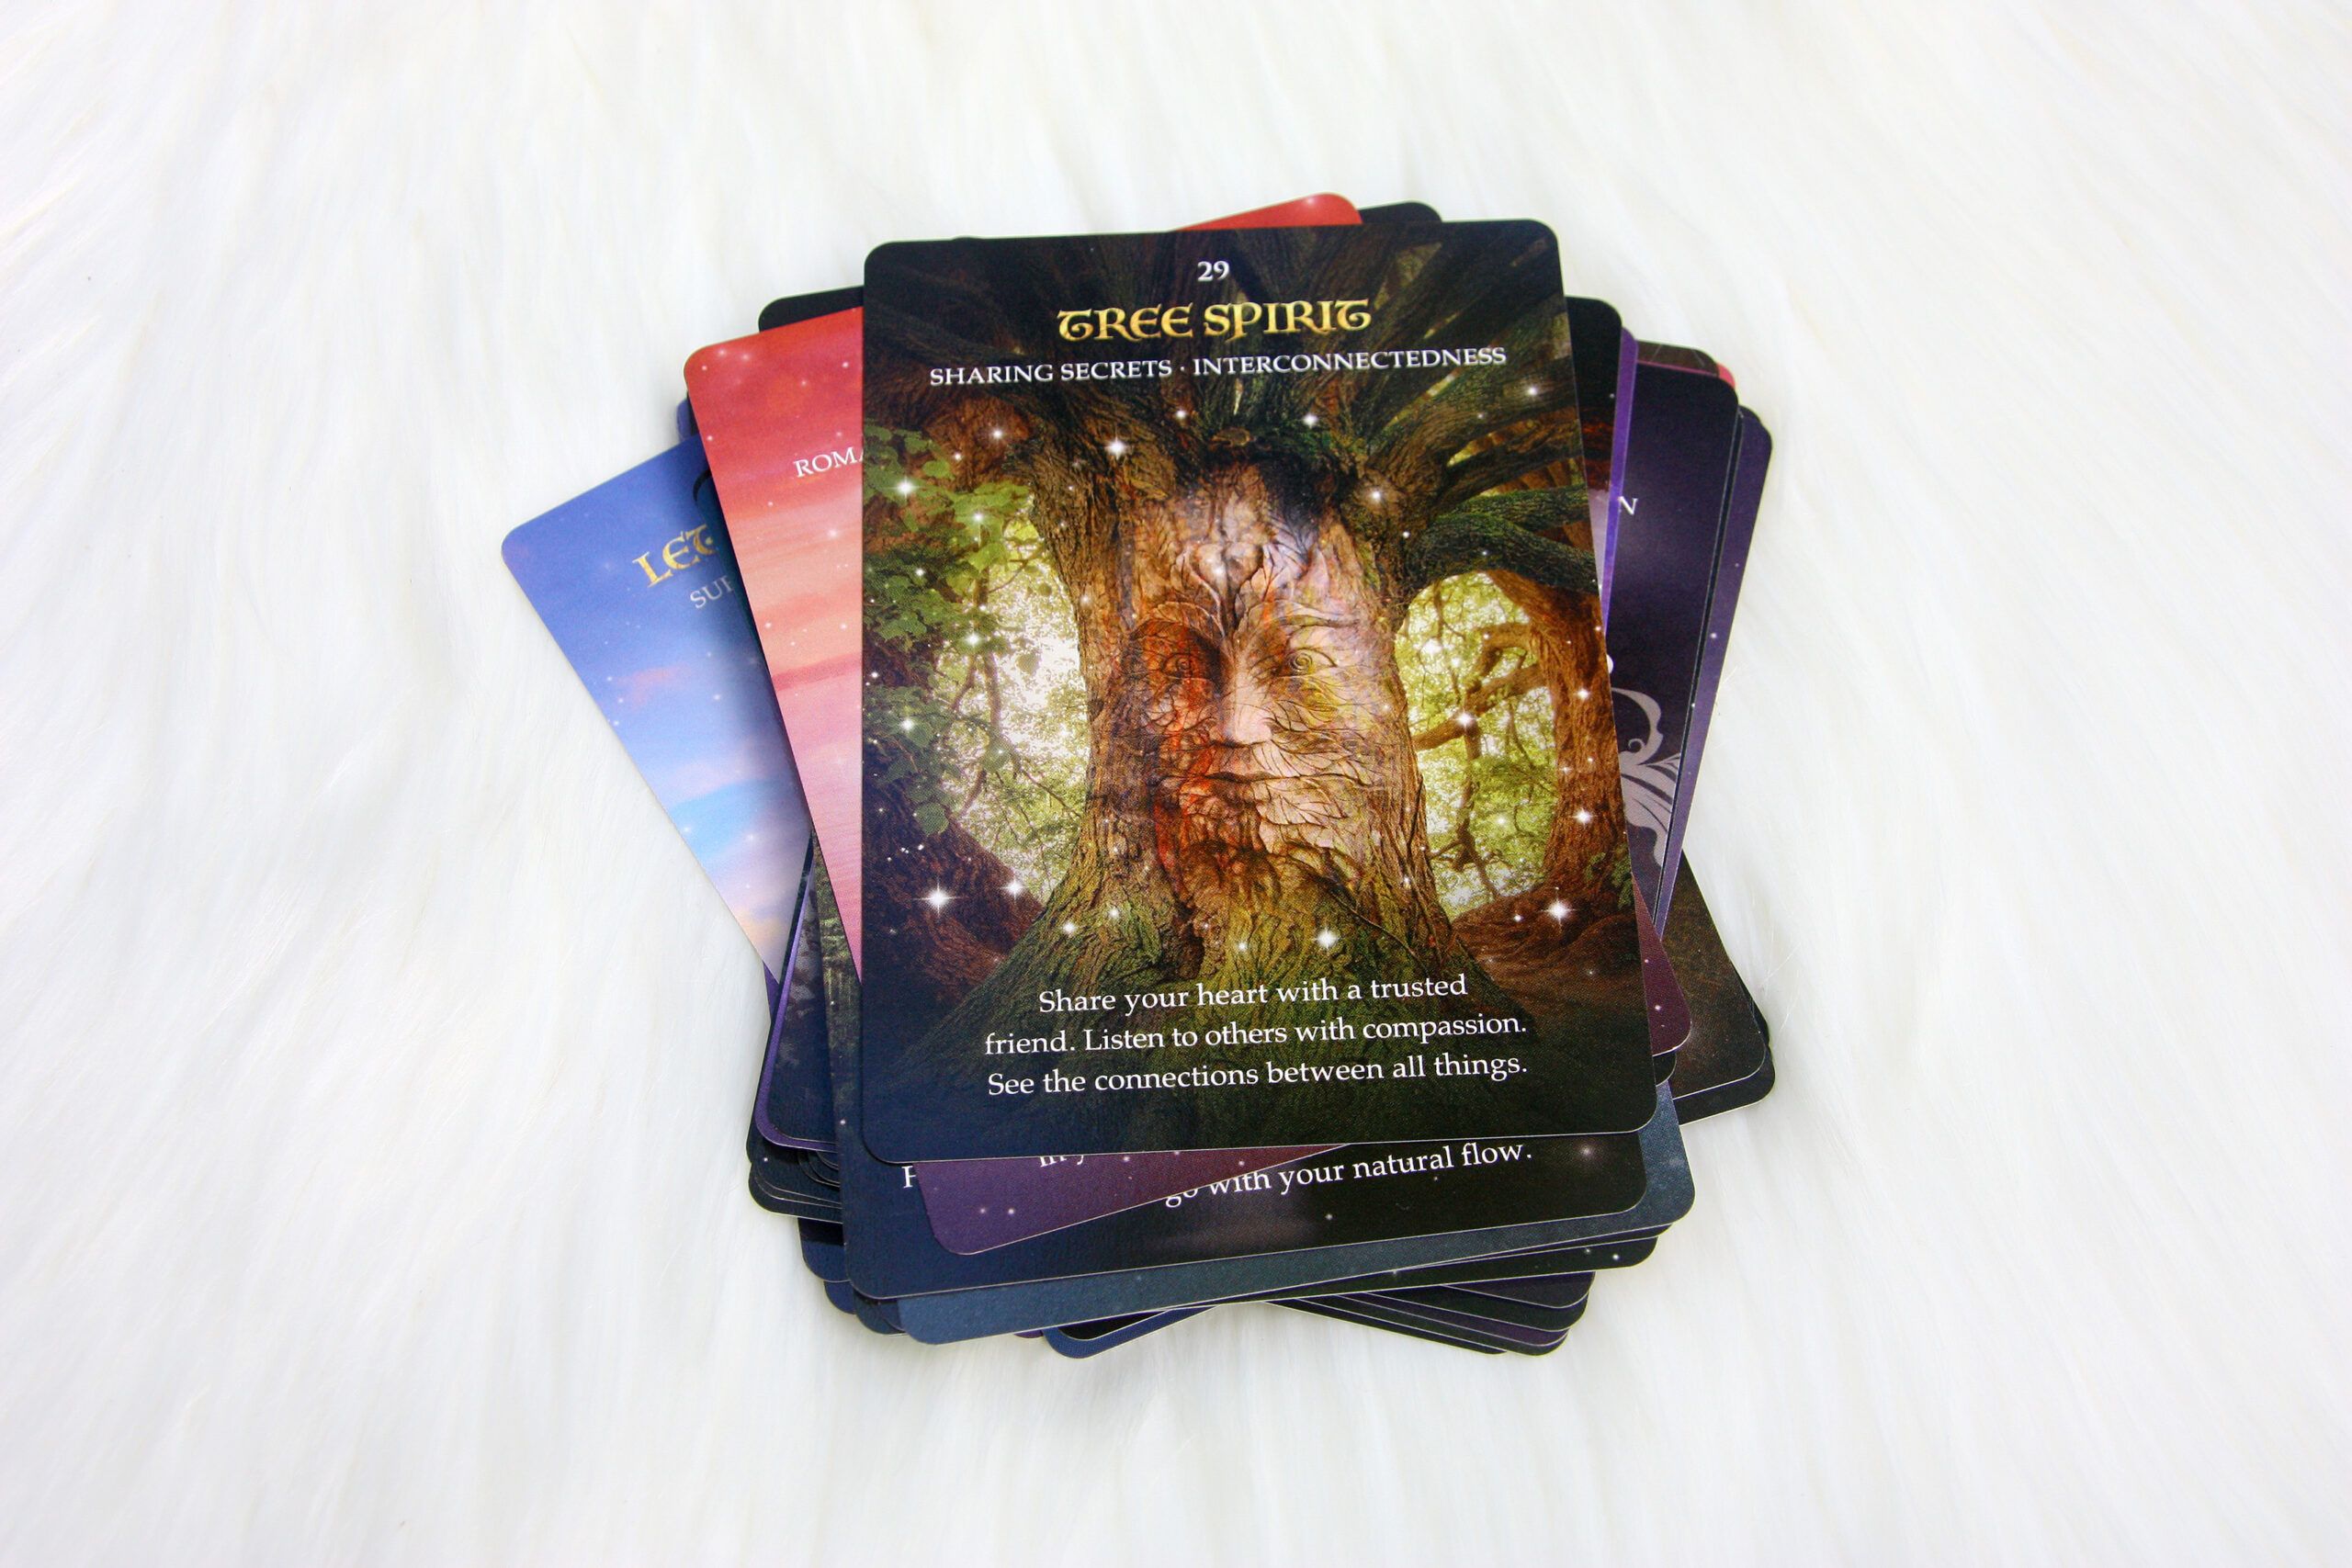 Divine Magic Oracle Cards (Anna Frolik)